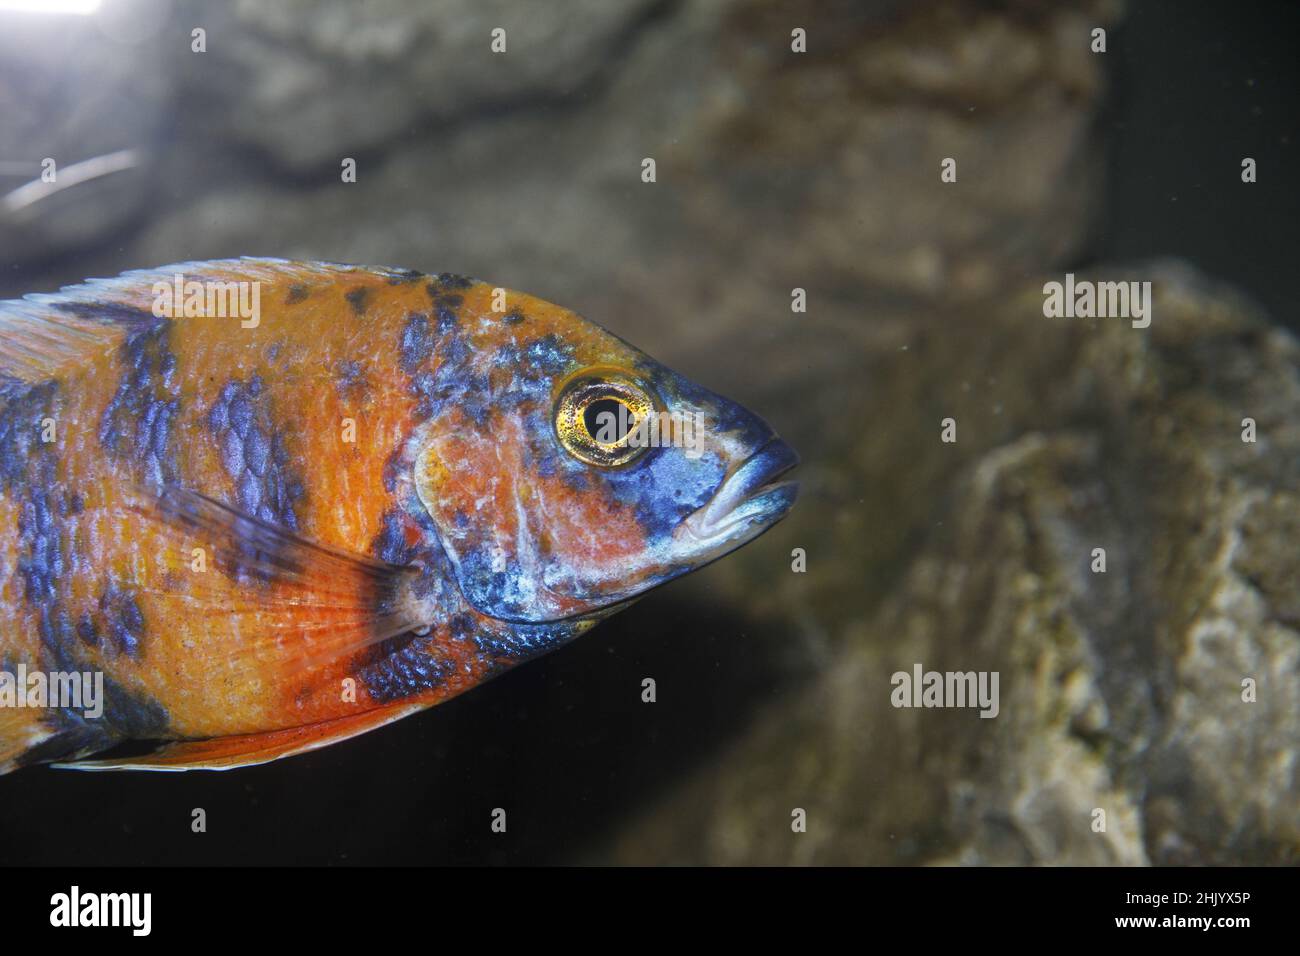 Closeup of the Labidochromis sp. "Hongi". Hongi red top fish. Stock Photo